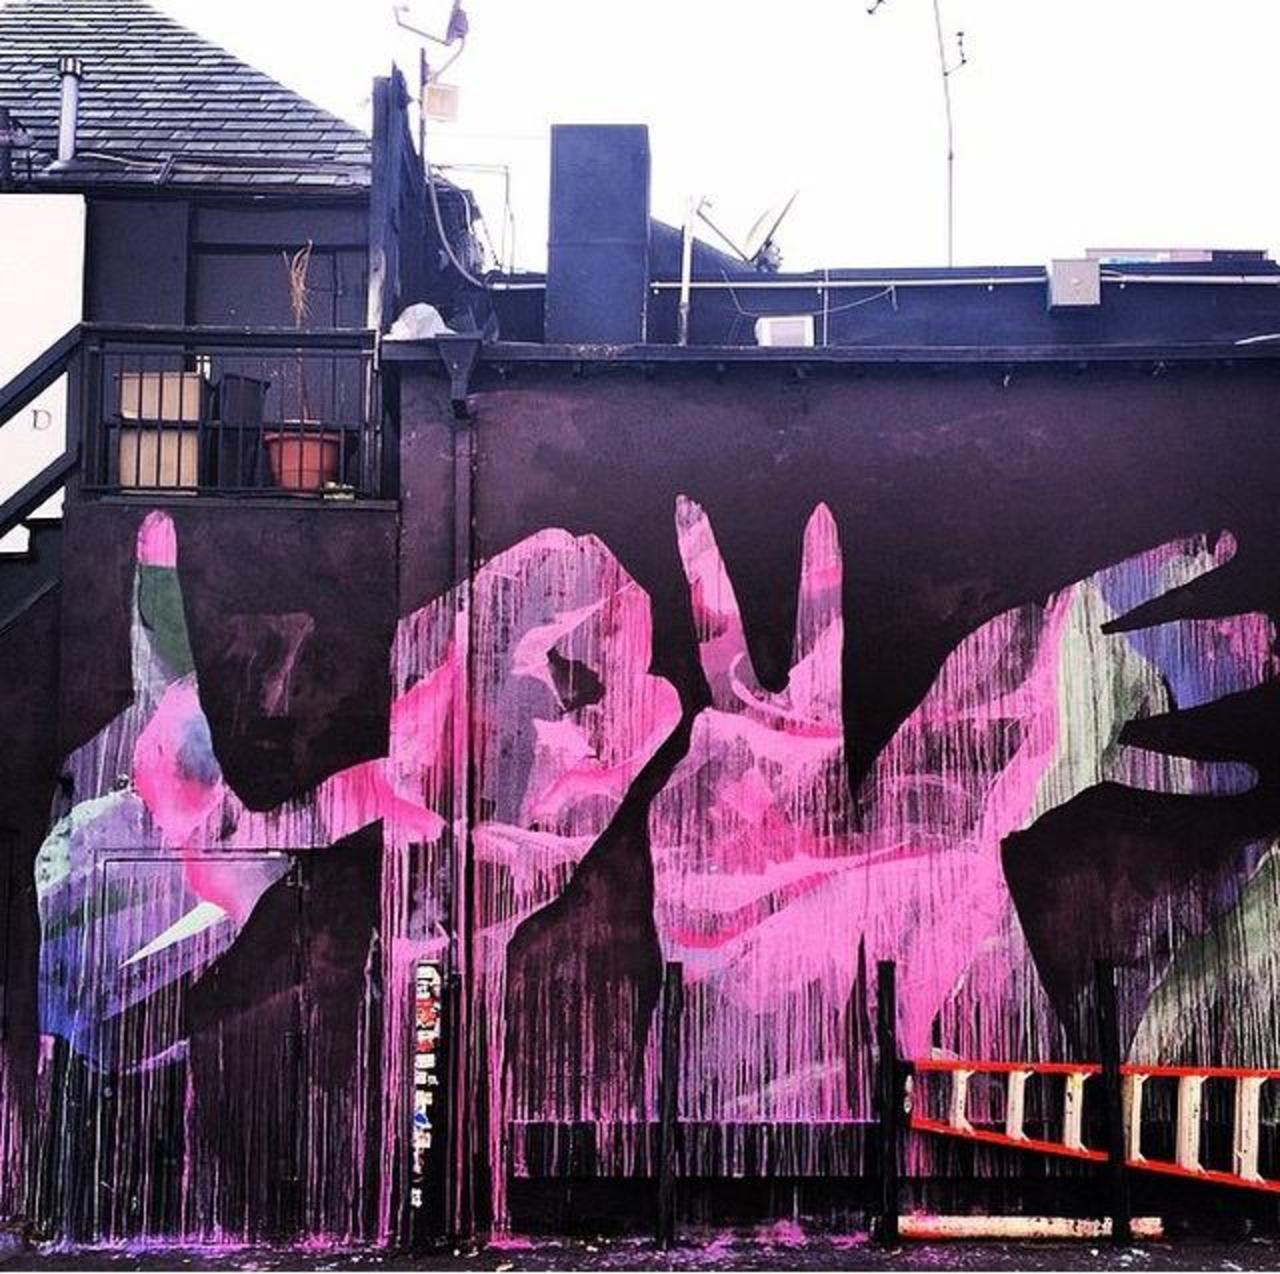 Sistemas4S: 'Love' 
Street Art by Michael Owen ❤️

#art #arte #graffiti #streetart http://t.co/AjrSkIjBUM